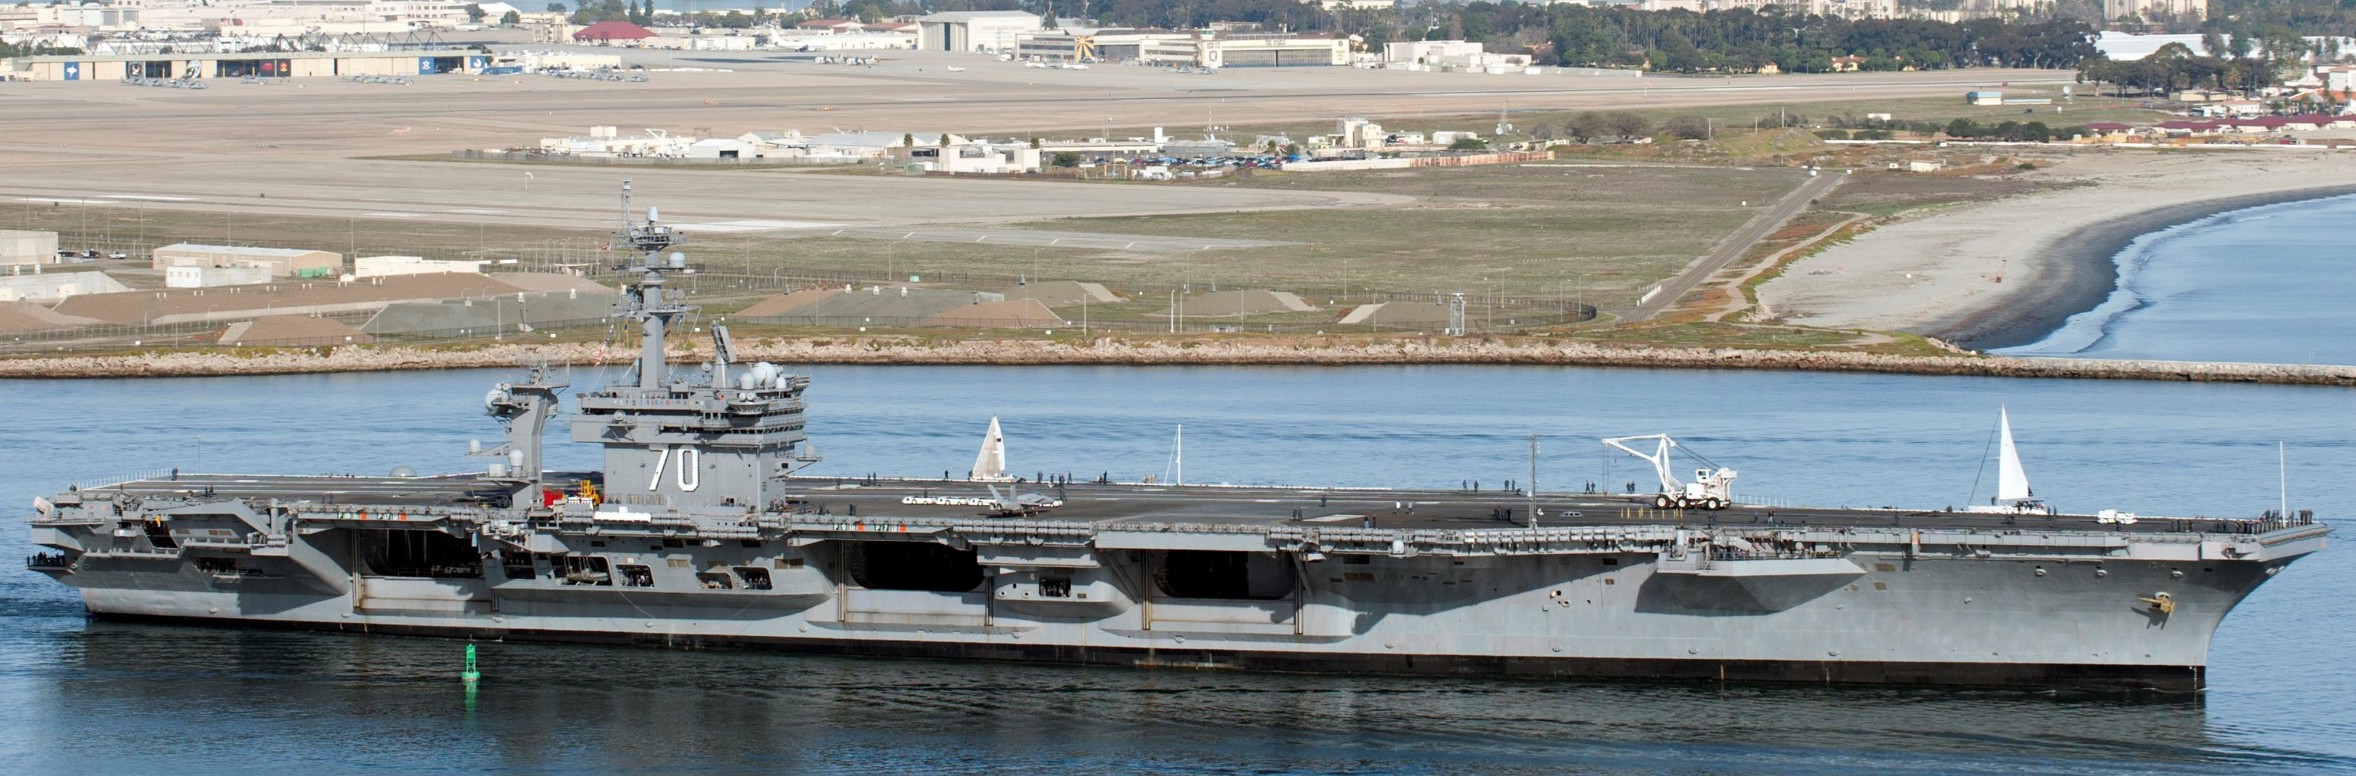 cvn-70 uss carl vinson nimitz class aircraft carrier us navy 216 san diego california